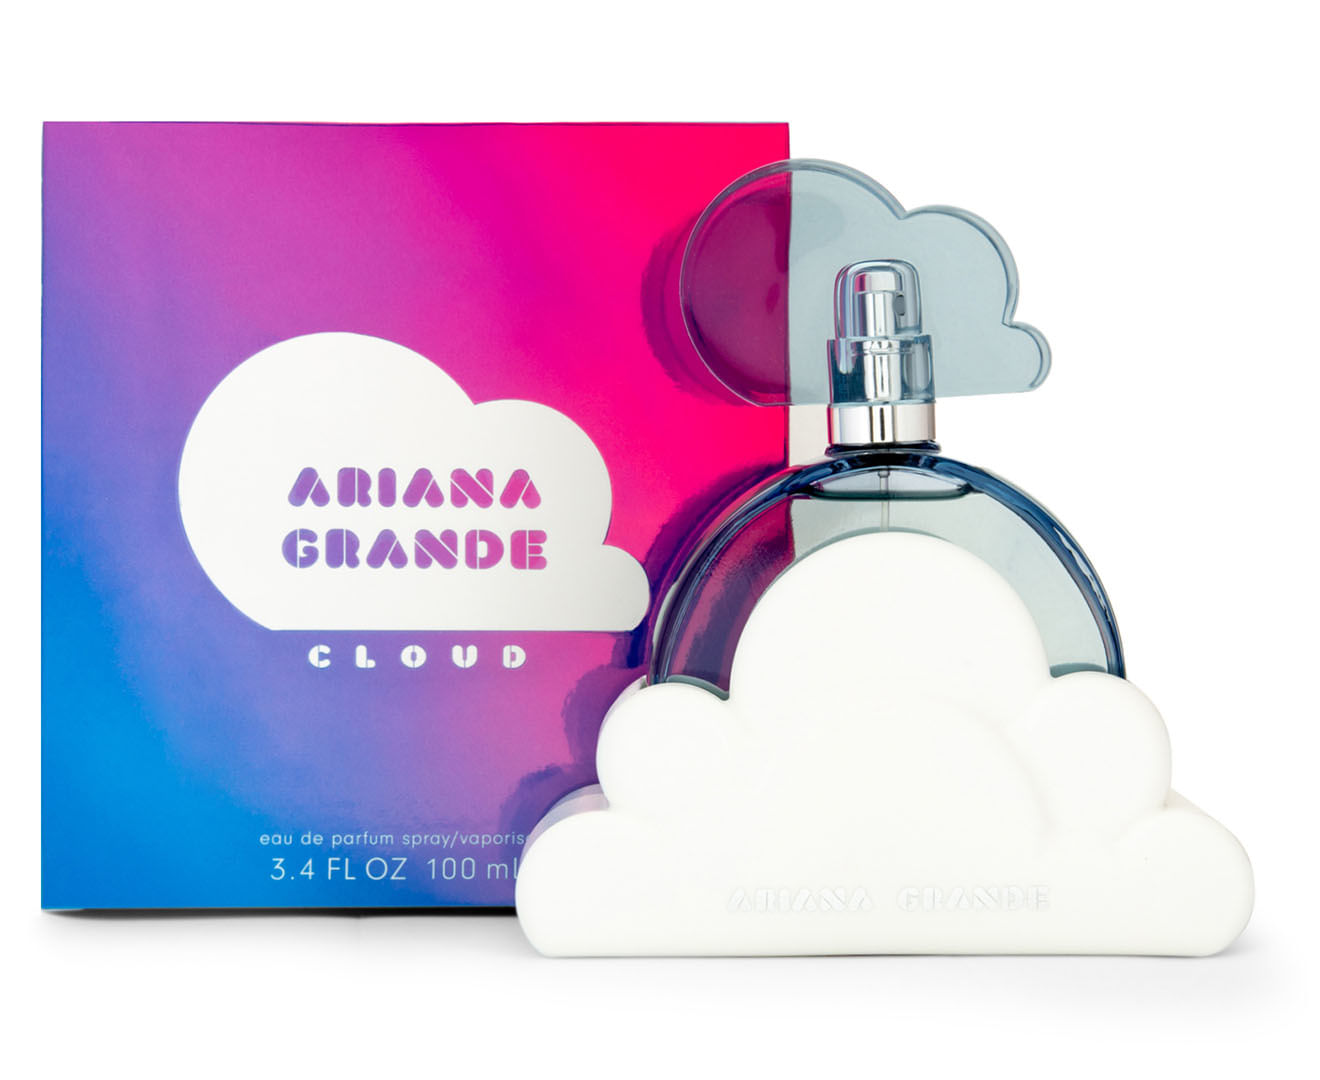 Perfume Cloud by Ariana Grande 100 ml